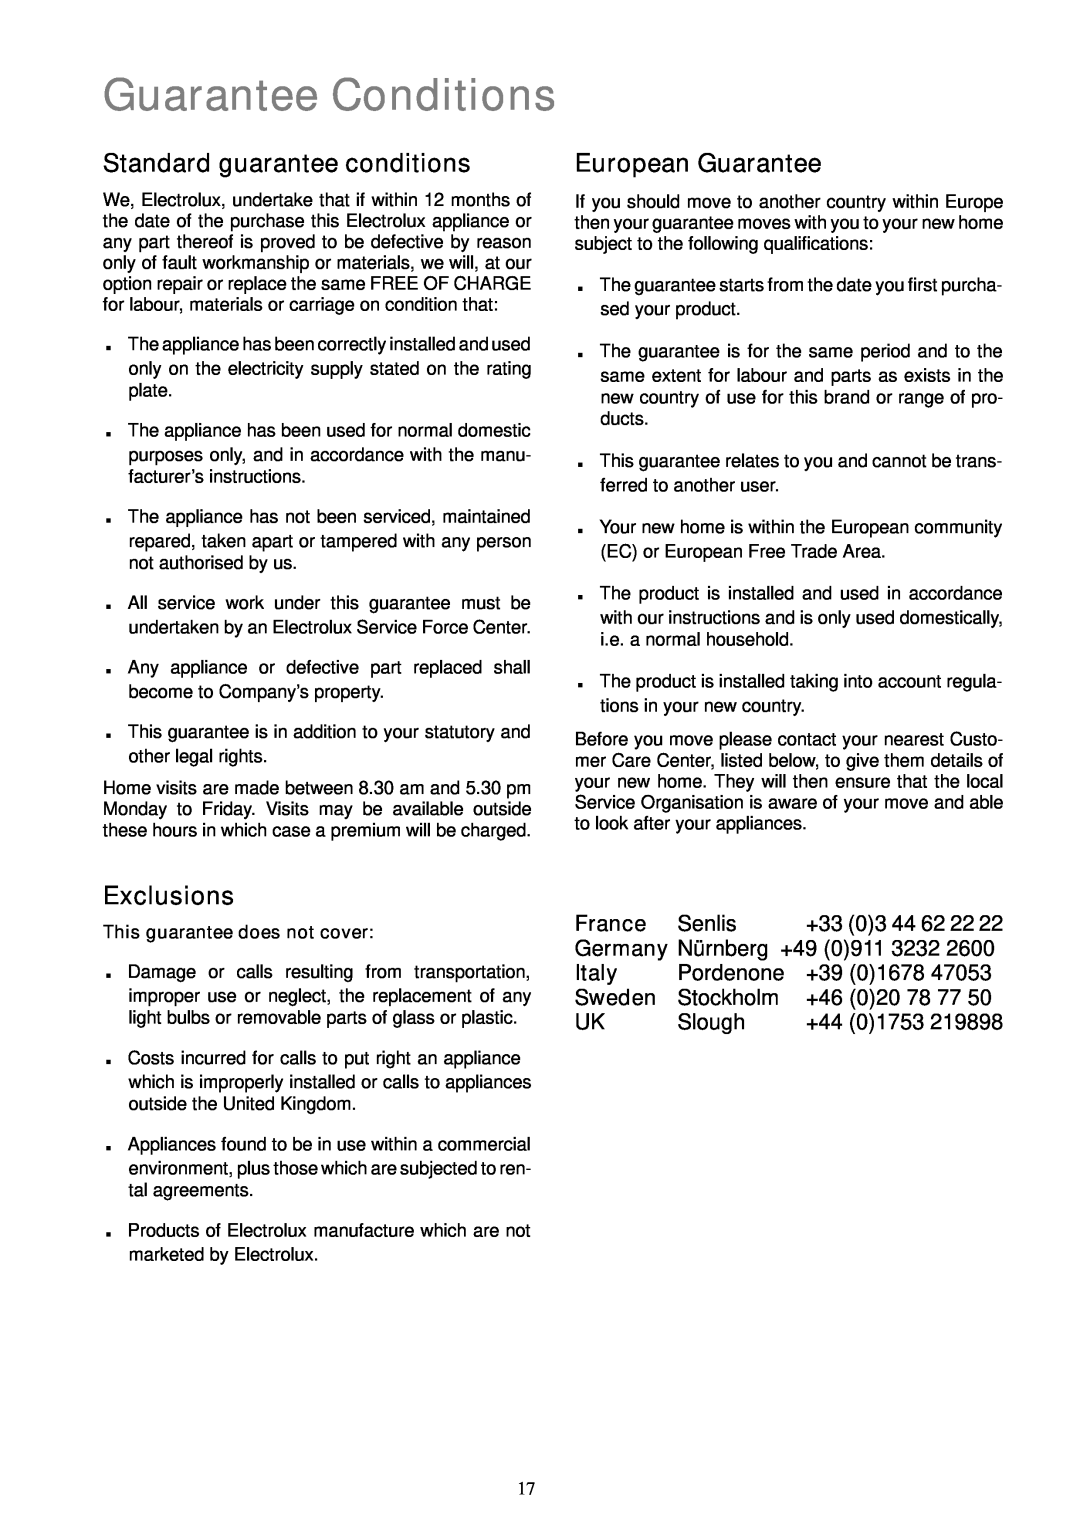 Electrolux EHO 602 K Guarantee Conditions, Standard guarantee conditions, European Guarantee, Exclusions, France, Senlis 